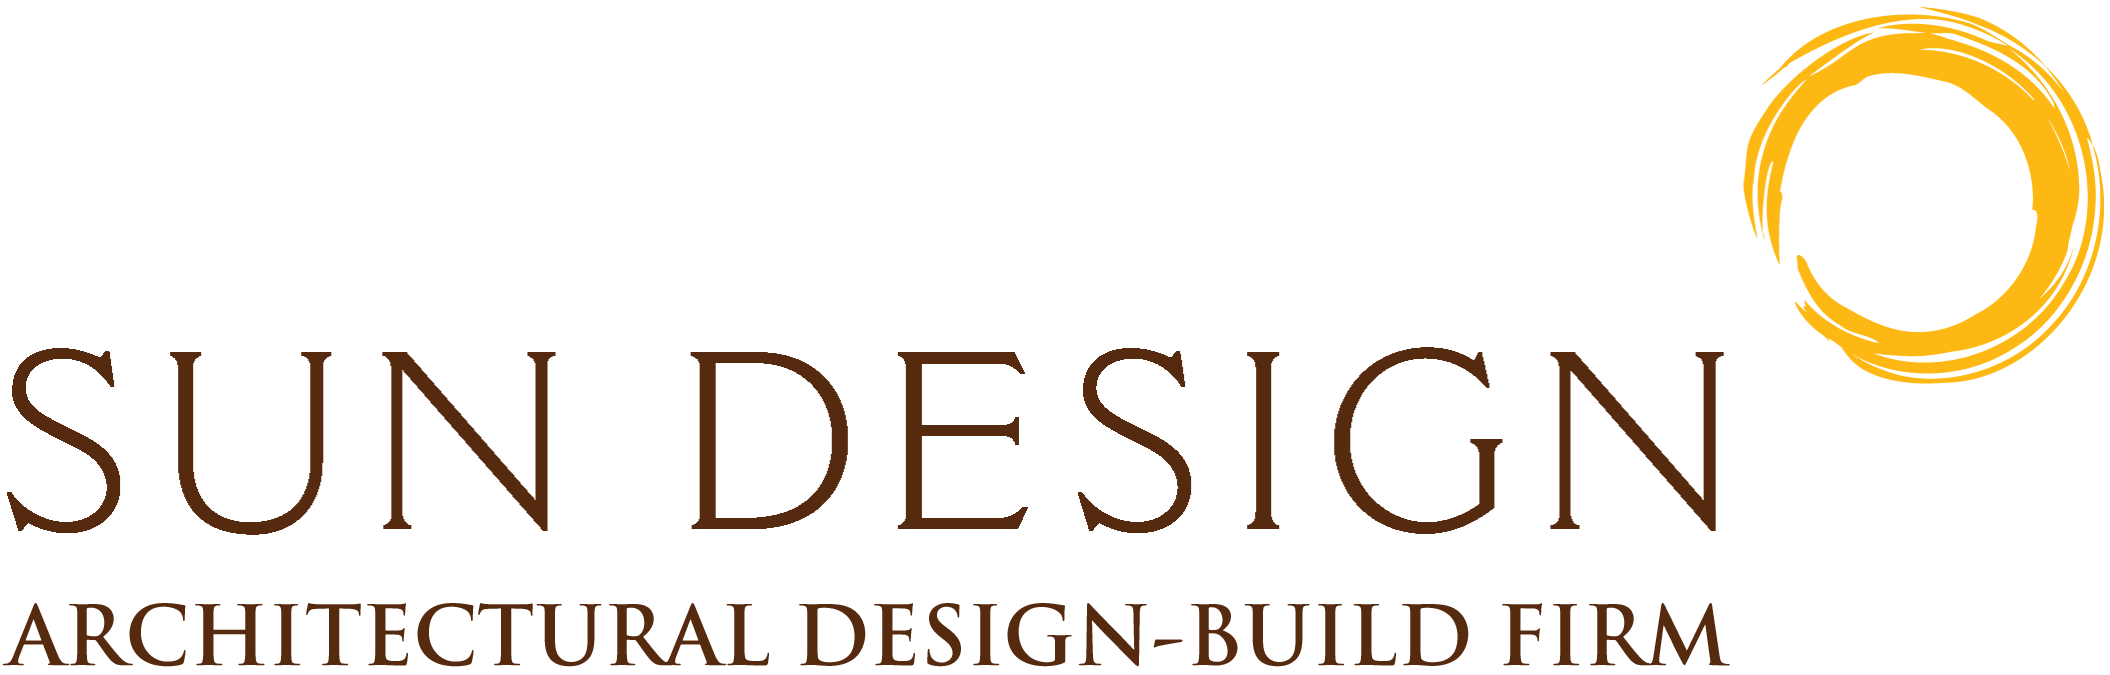 Sun Design Architectural Design Build Firm